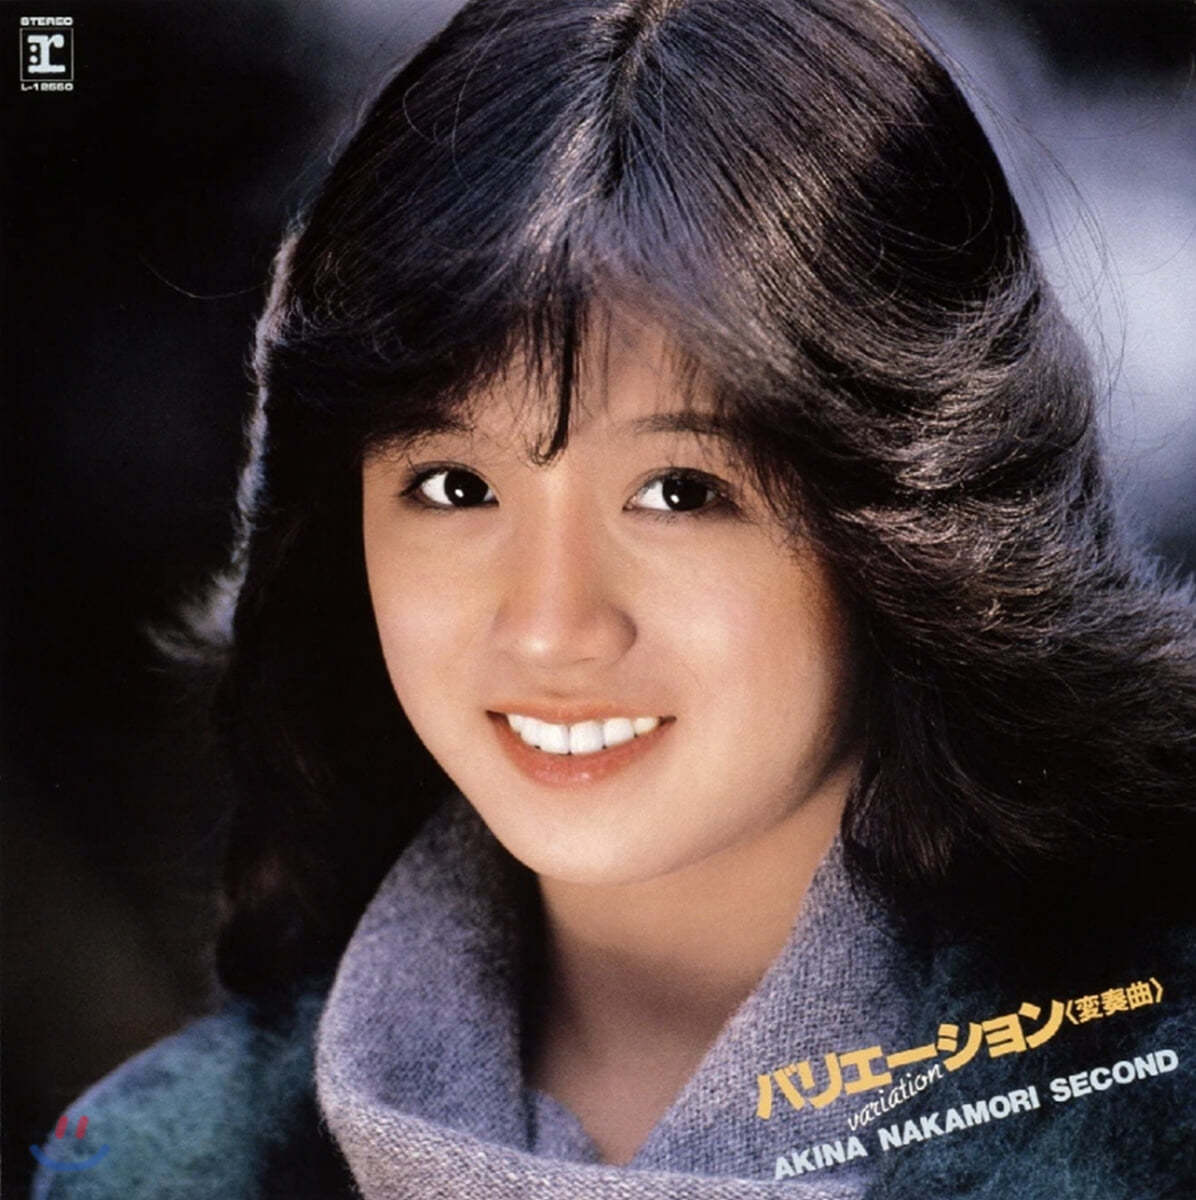 Nakamori Akina (나카모리 아키나) - Variation Akina Nakamori Second [LP]